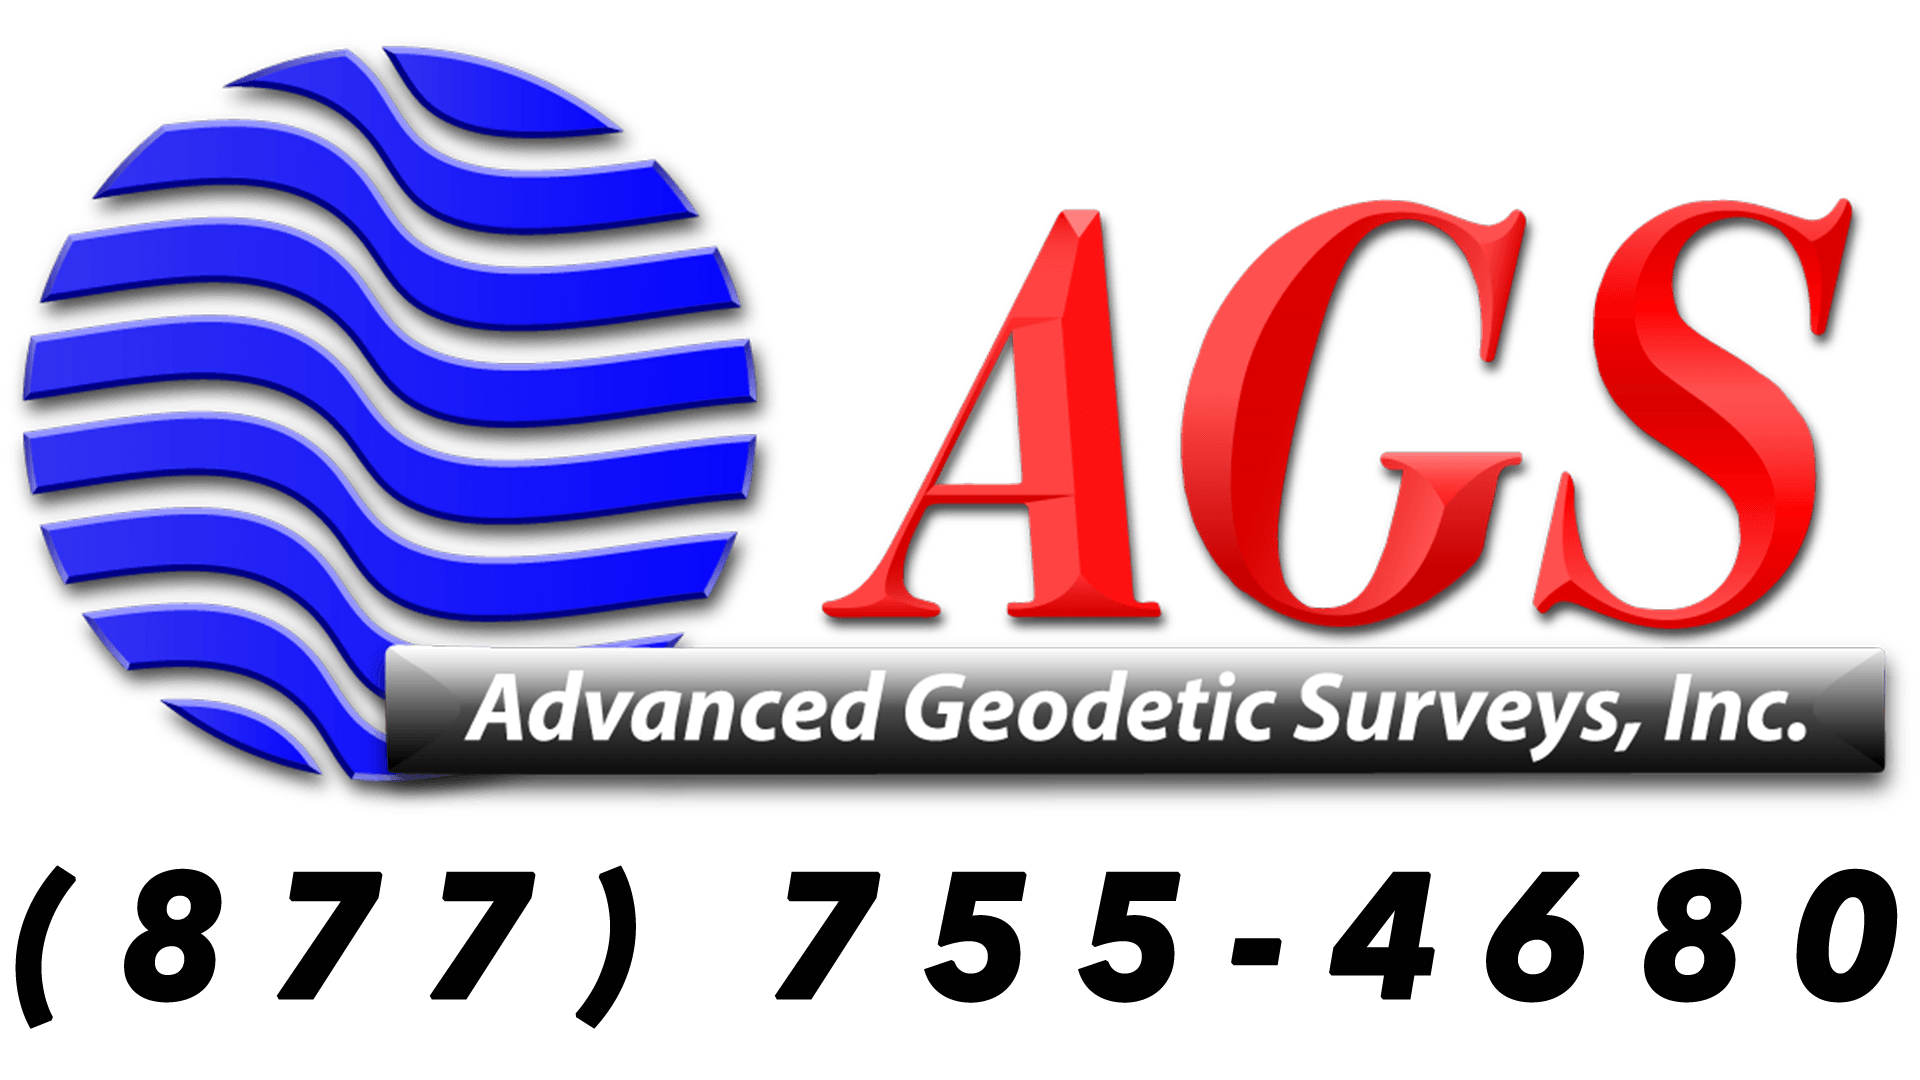 Trimble Logo - AGS. Call Us (877) 755 4680. Trimble Surveying Equipment